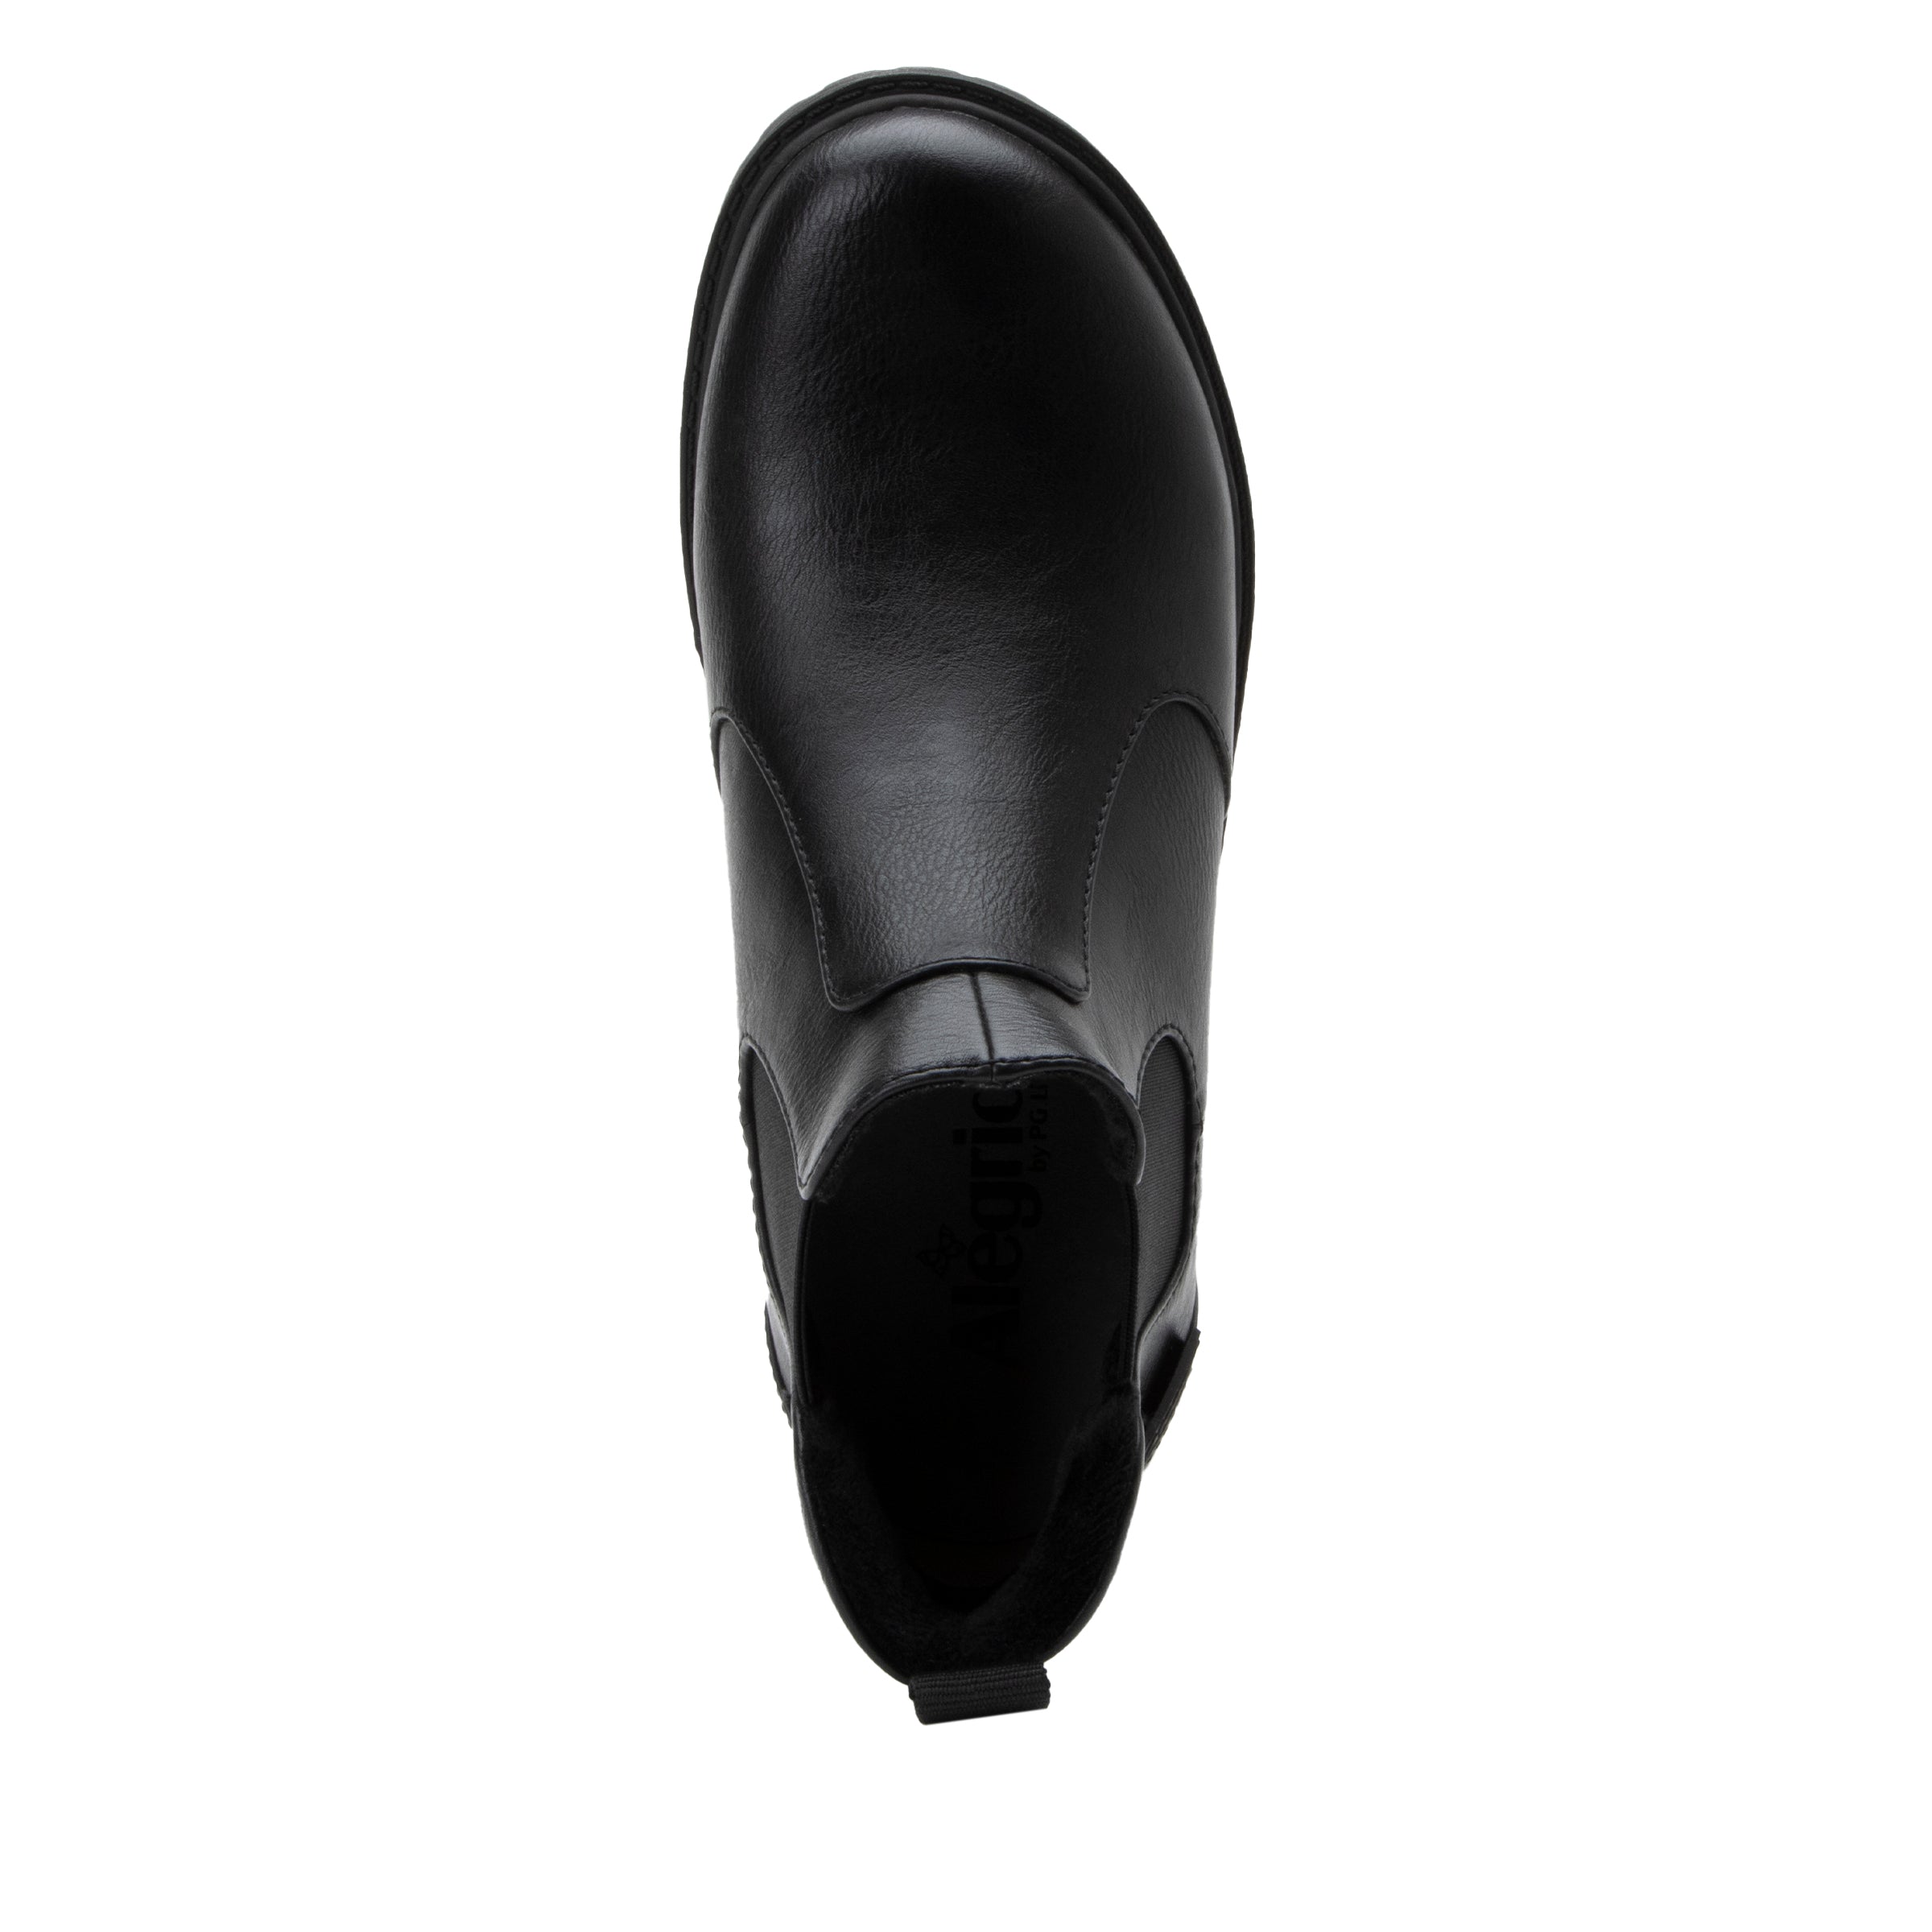 Rowen Black Boot - Alegria Shoes